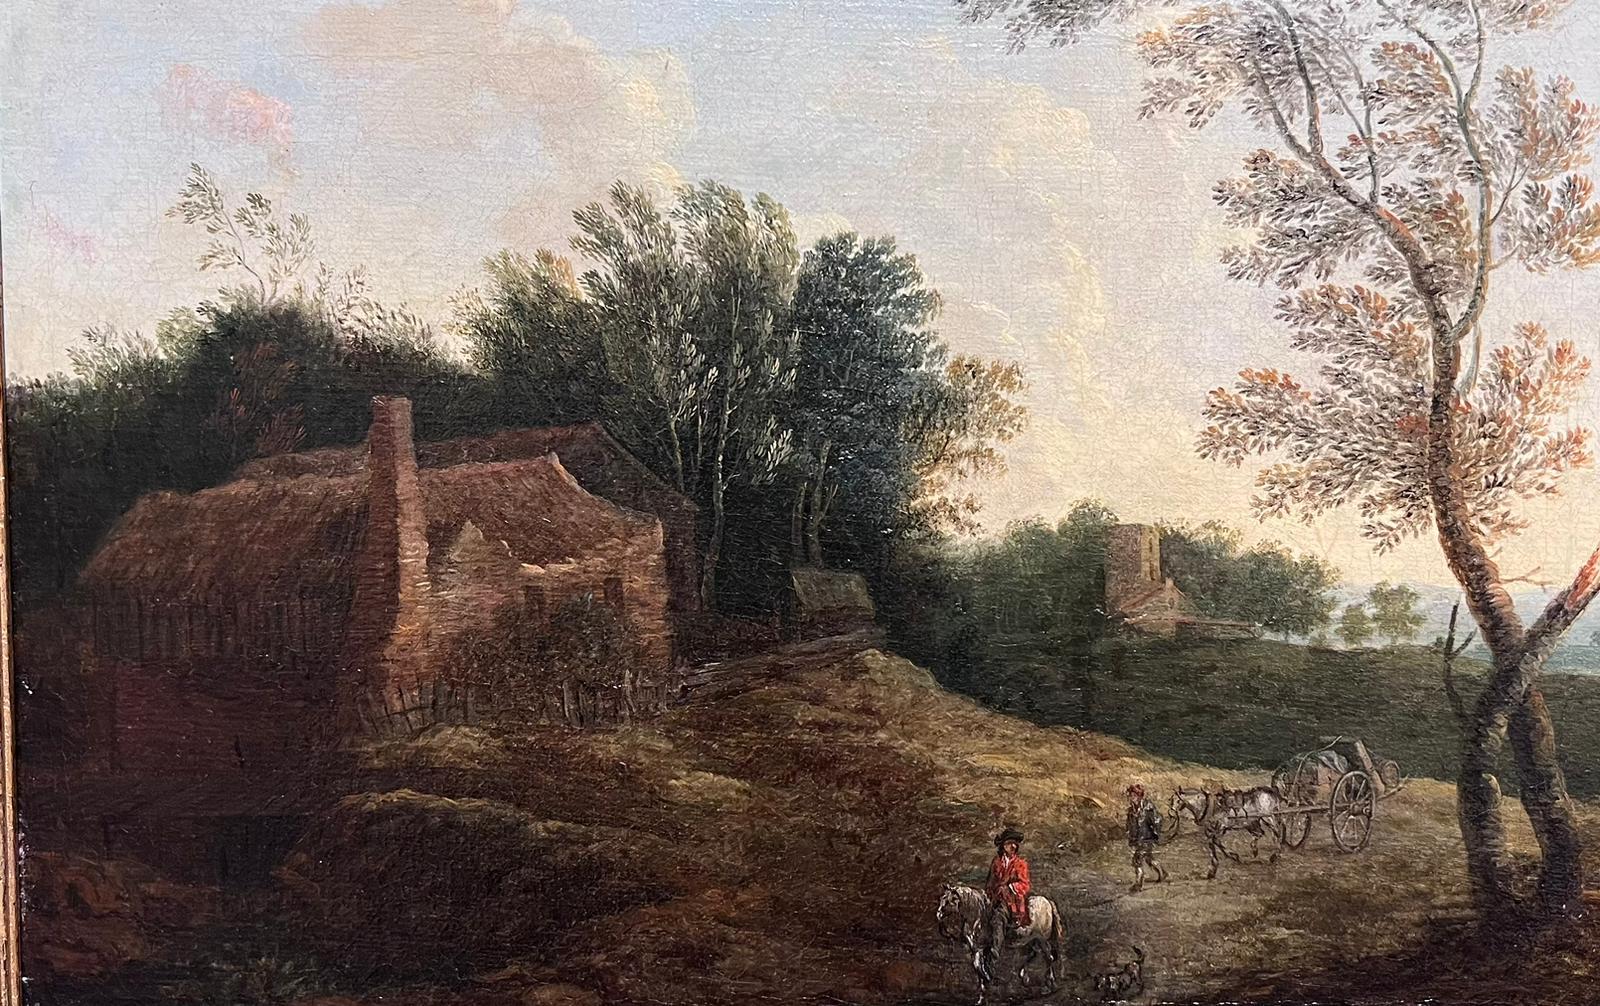 Feine 17. Jahrhundert Flemish Old Master Ölgemälde Reisende Land Landschaft (Alte Meister), Painting, von Jacques d'Arthois